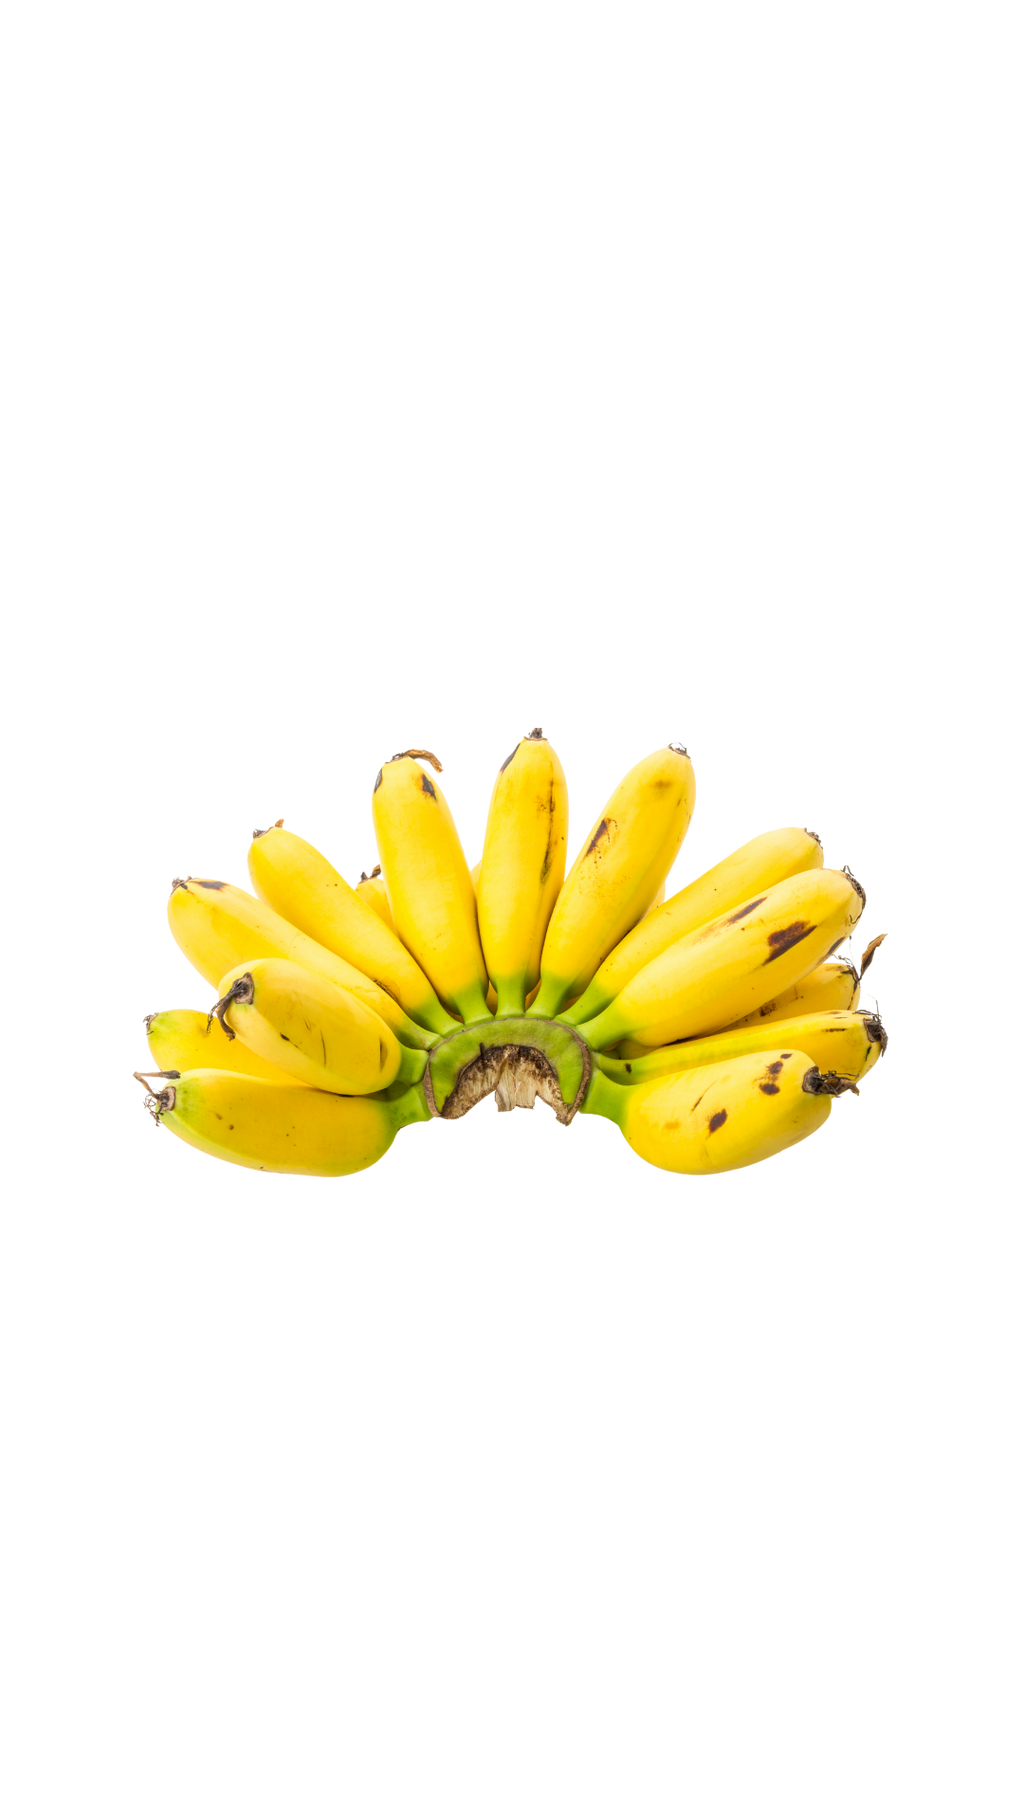 [Apple Banana]